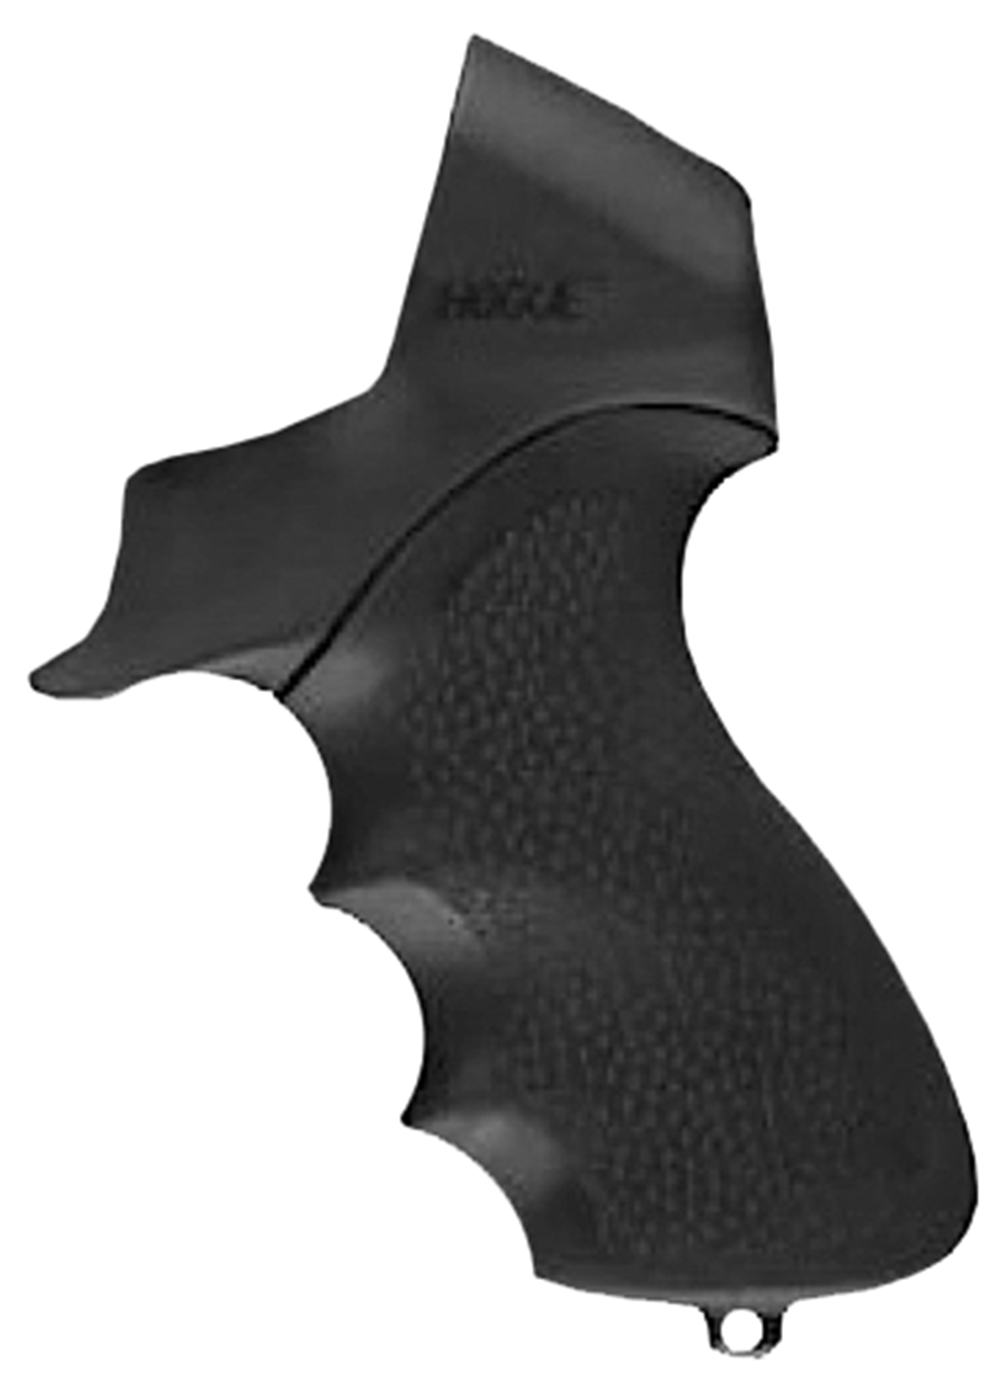 Hogue 05014 OverMolded Tamer  Black Rubber Pistol Grip with Finger Grooves for Mossberg 500 12 & 20 Gauge